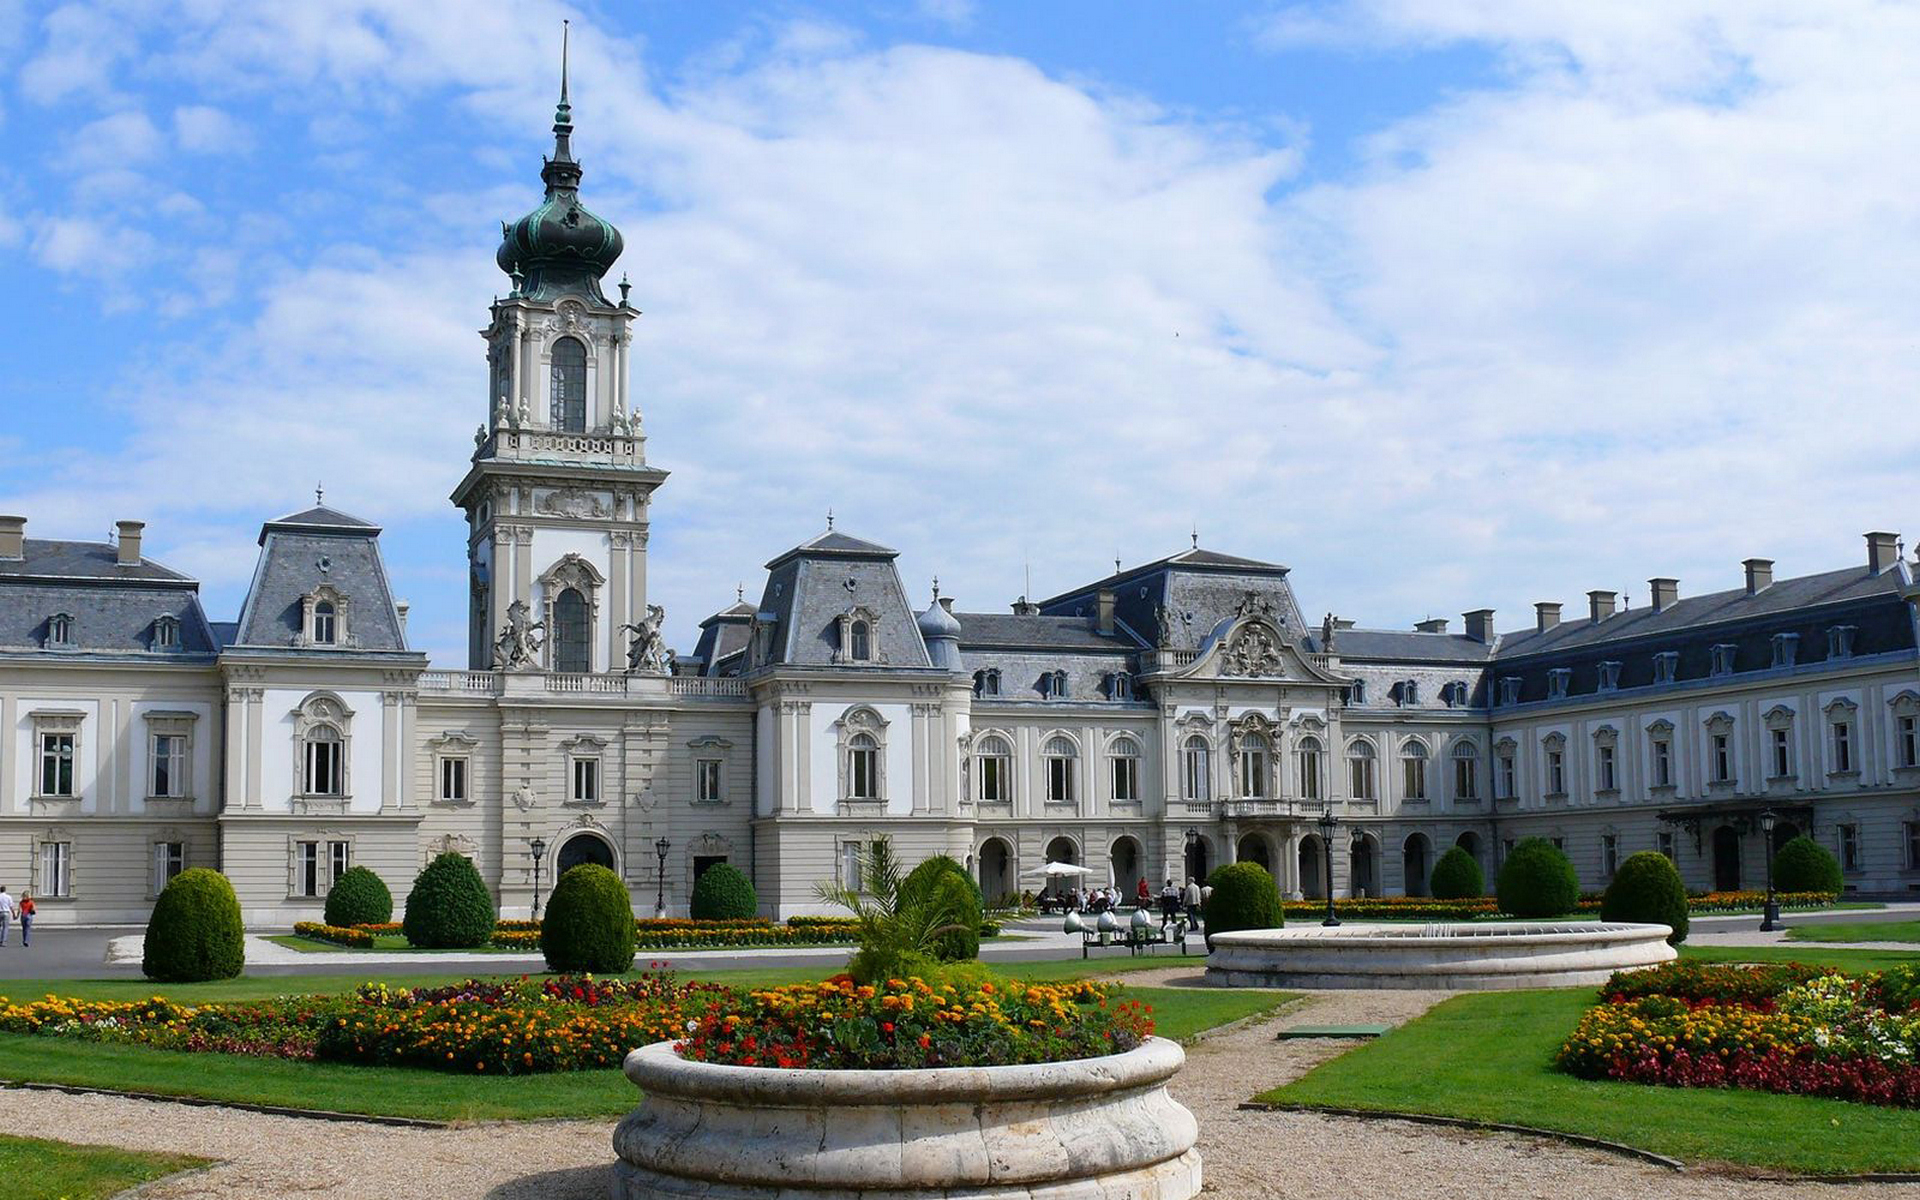 Festetics Palace in Hungary